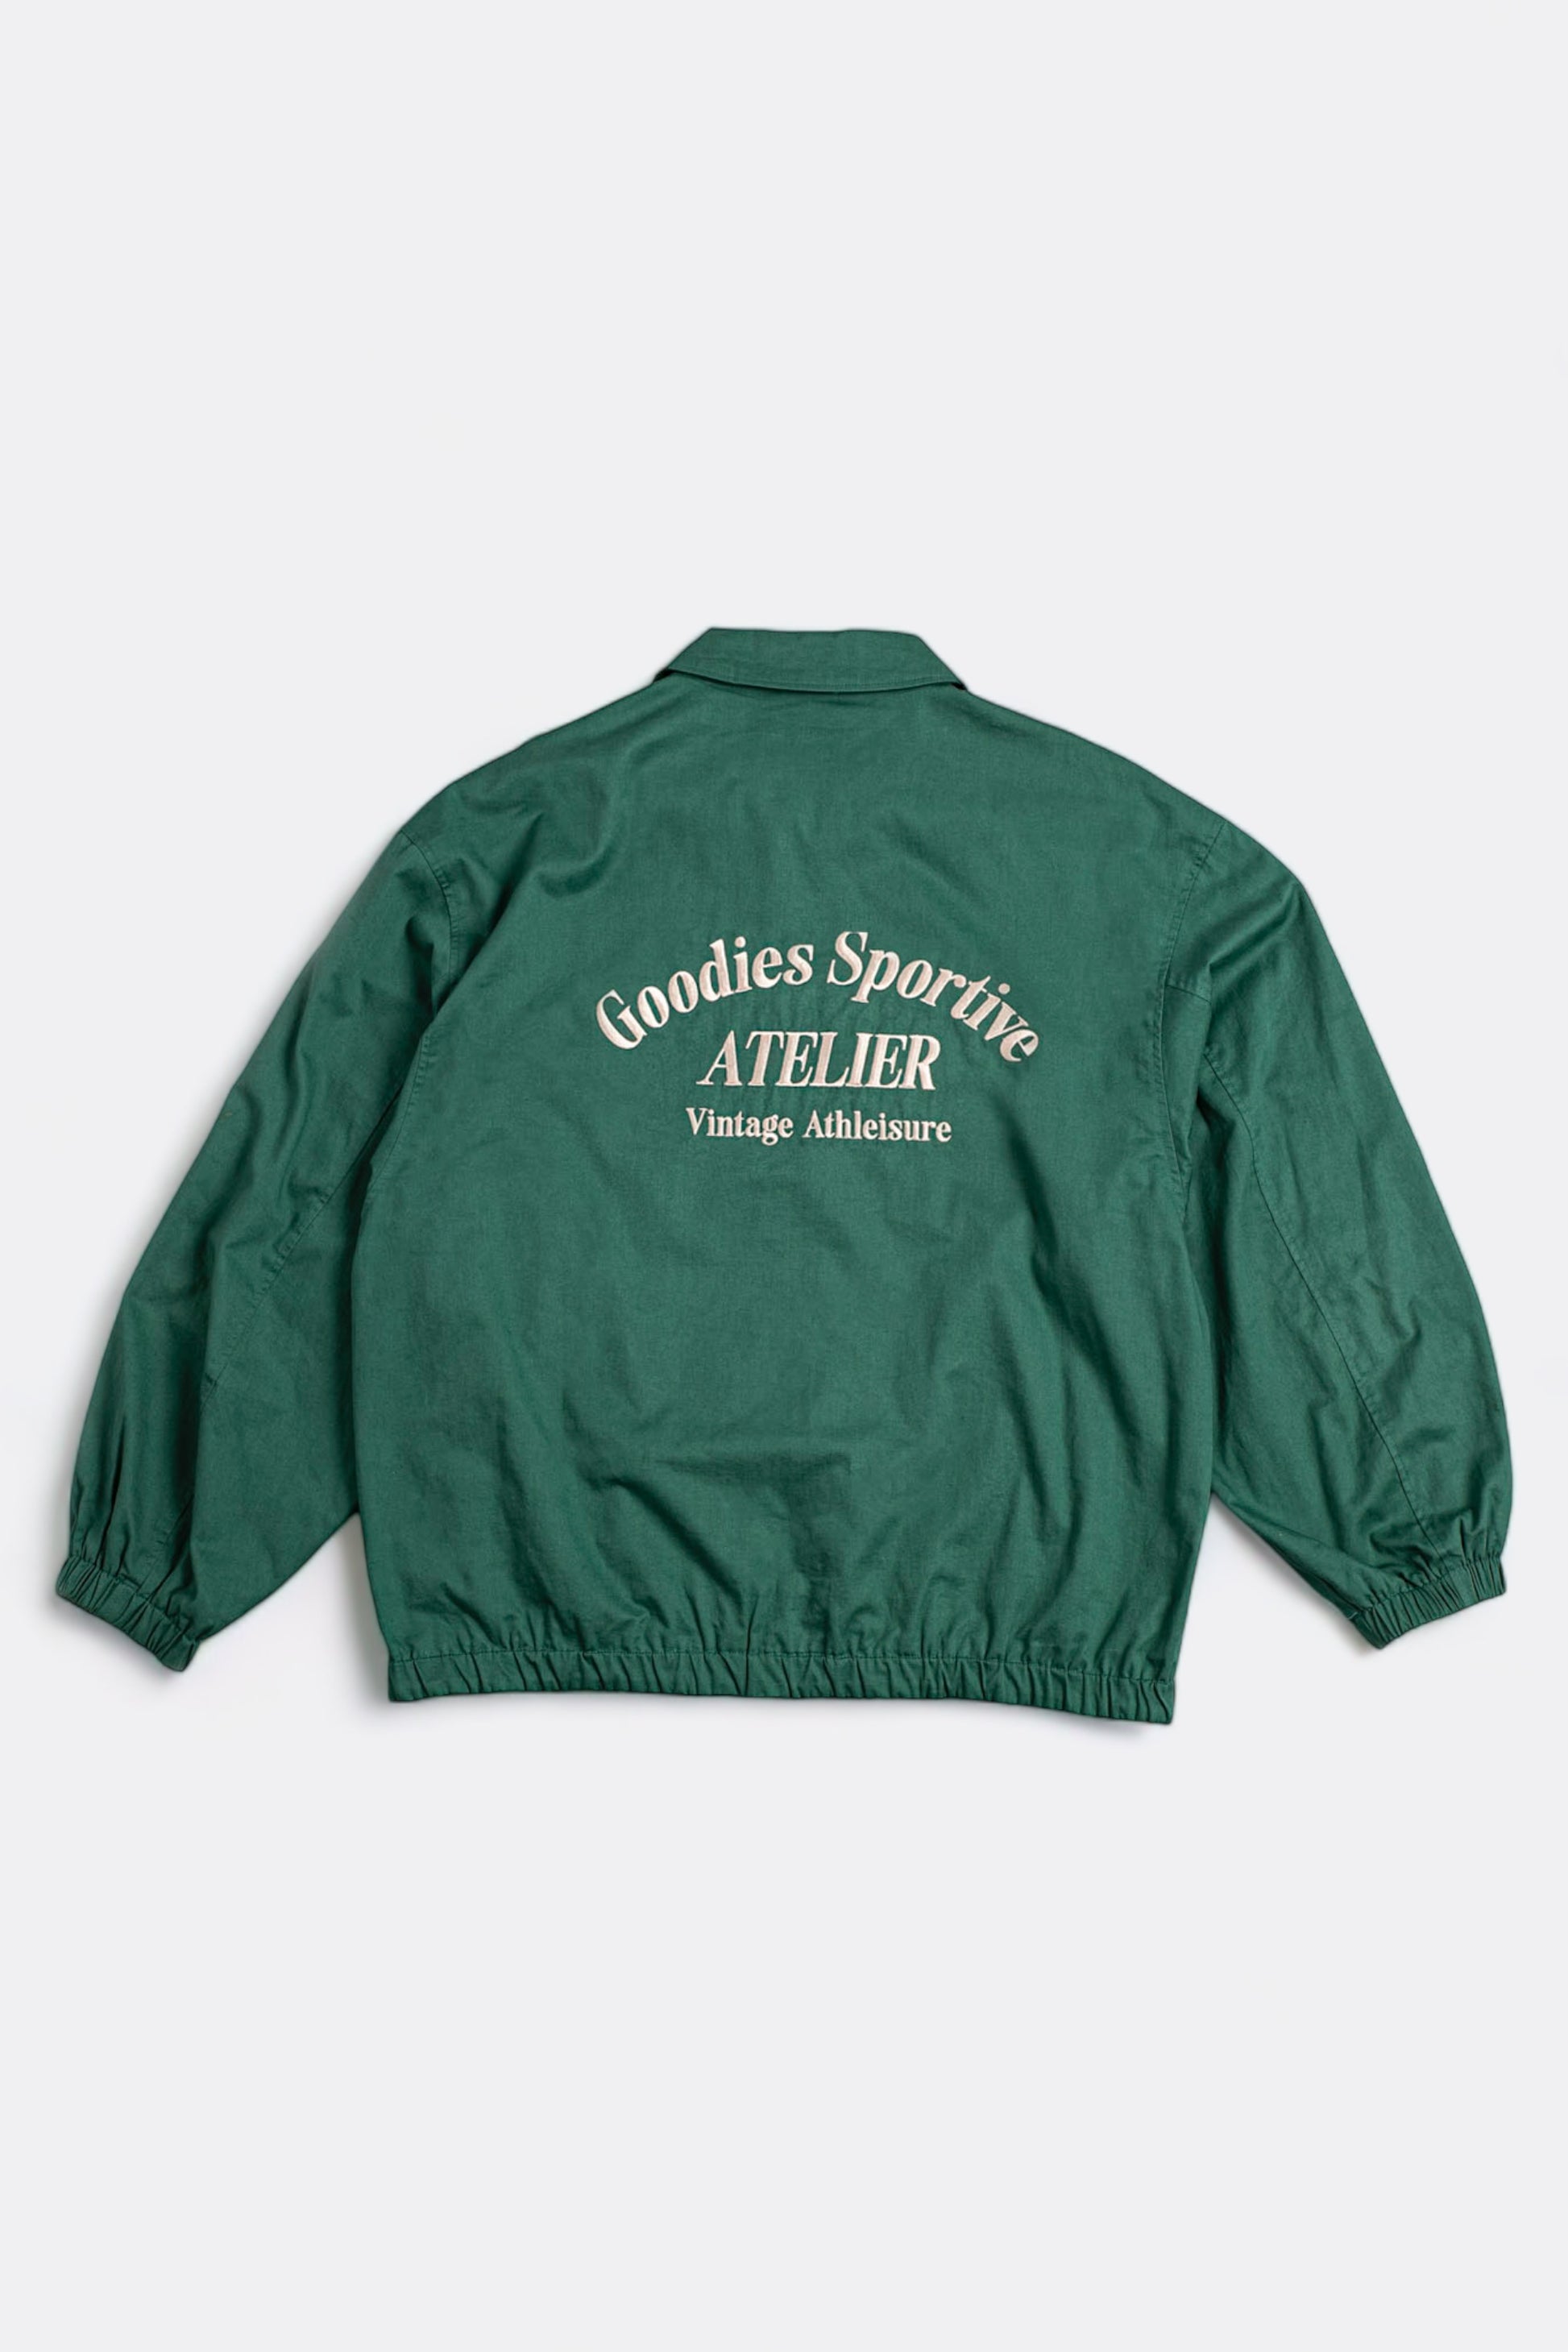 Goodies Sportive - Retro Jacket (Green)